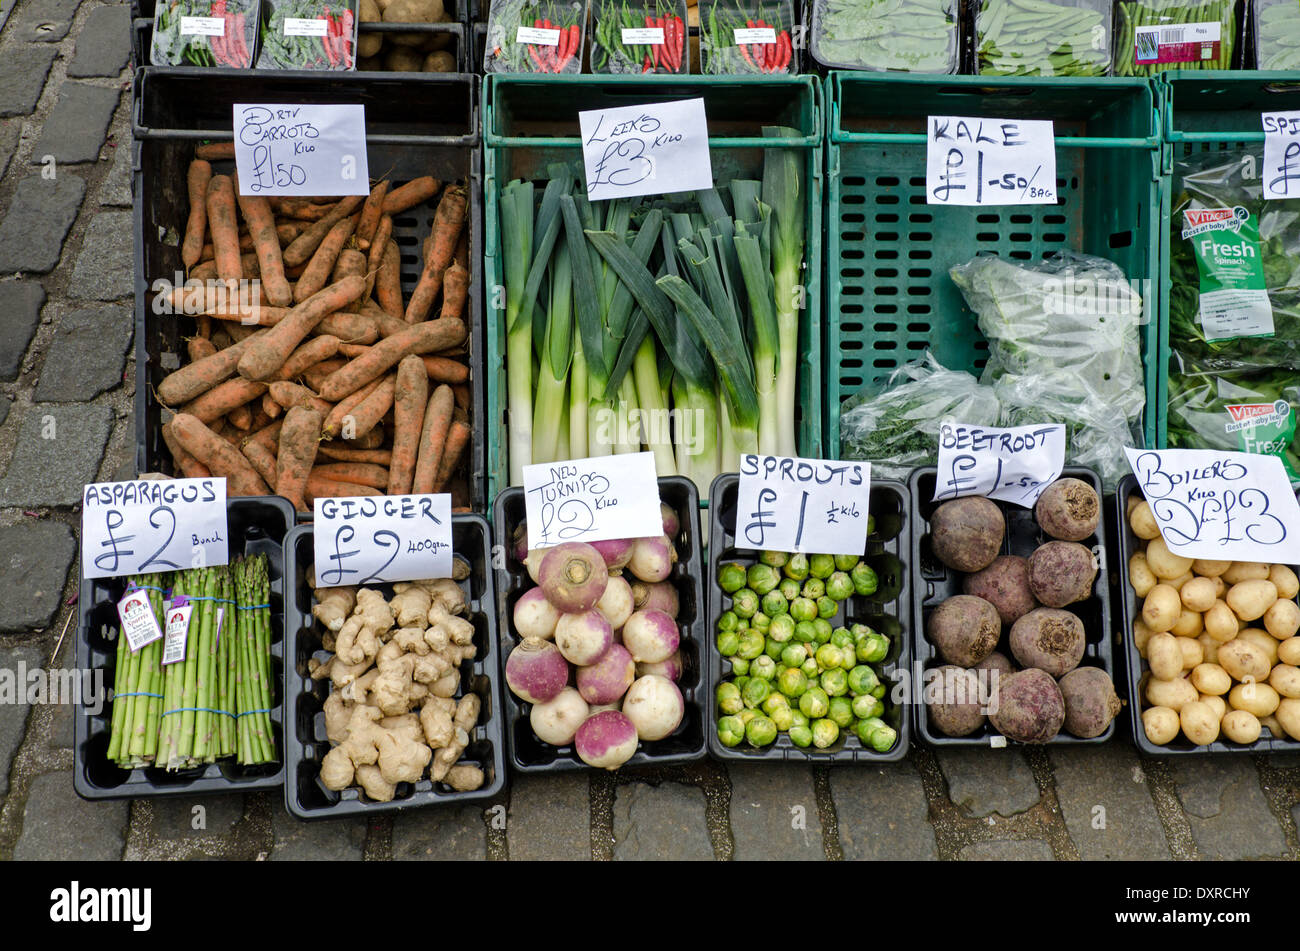 Vegetables on an outdoor market stall in the Grassmarket, Edinburgh, UK. Stock Photo